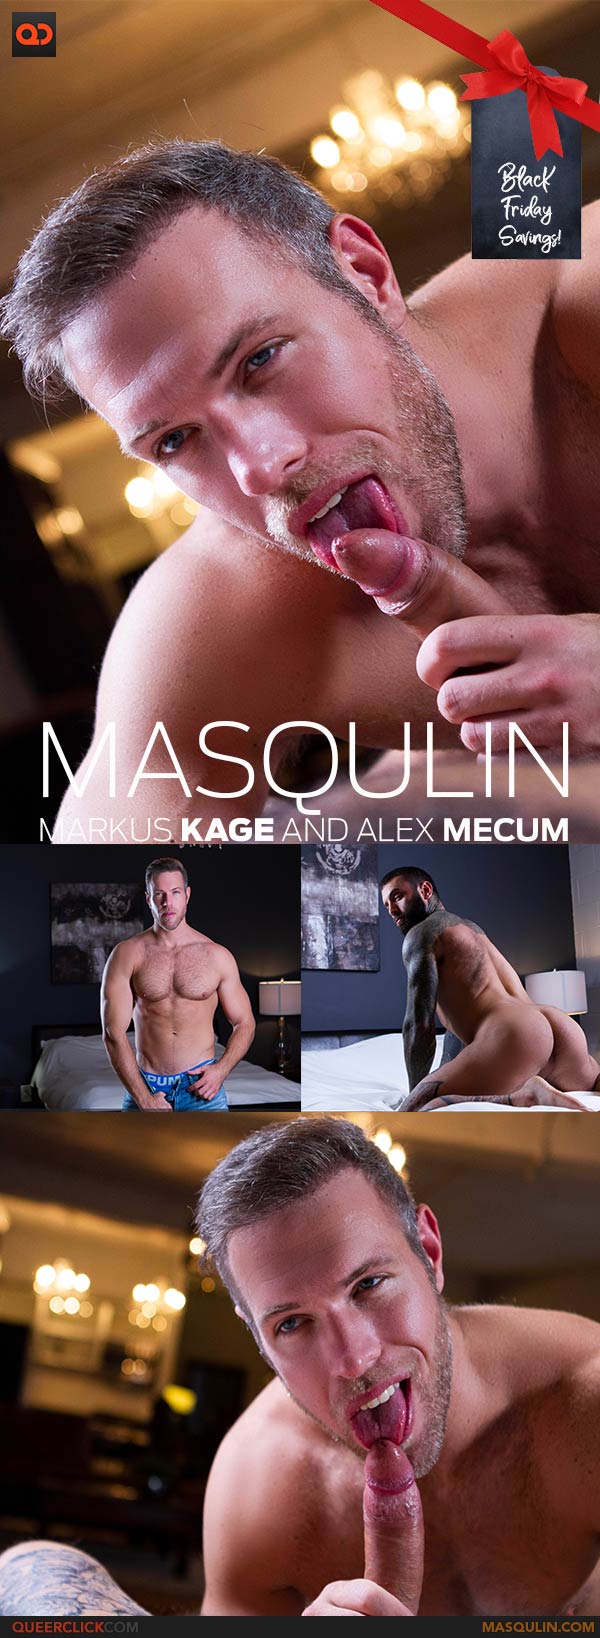 Masqulin: Markus Kage and Alex Mecum - BLACK FRIDAY SAVINGS!